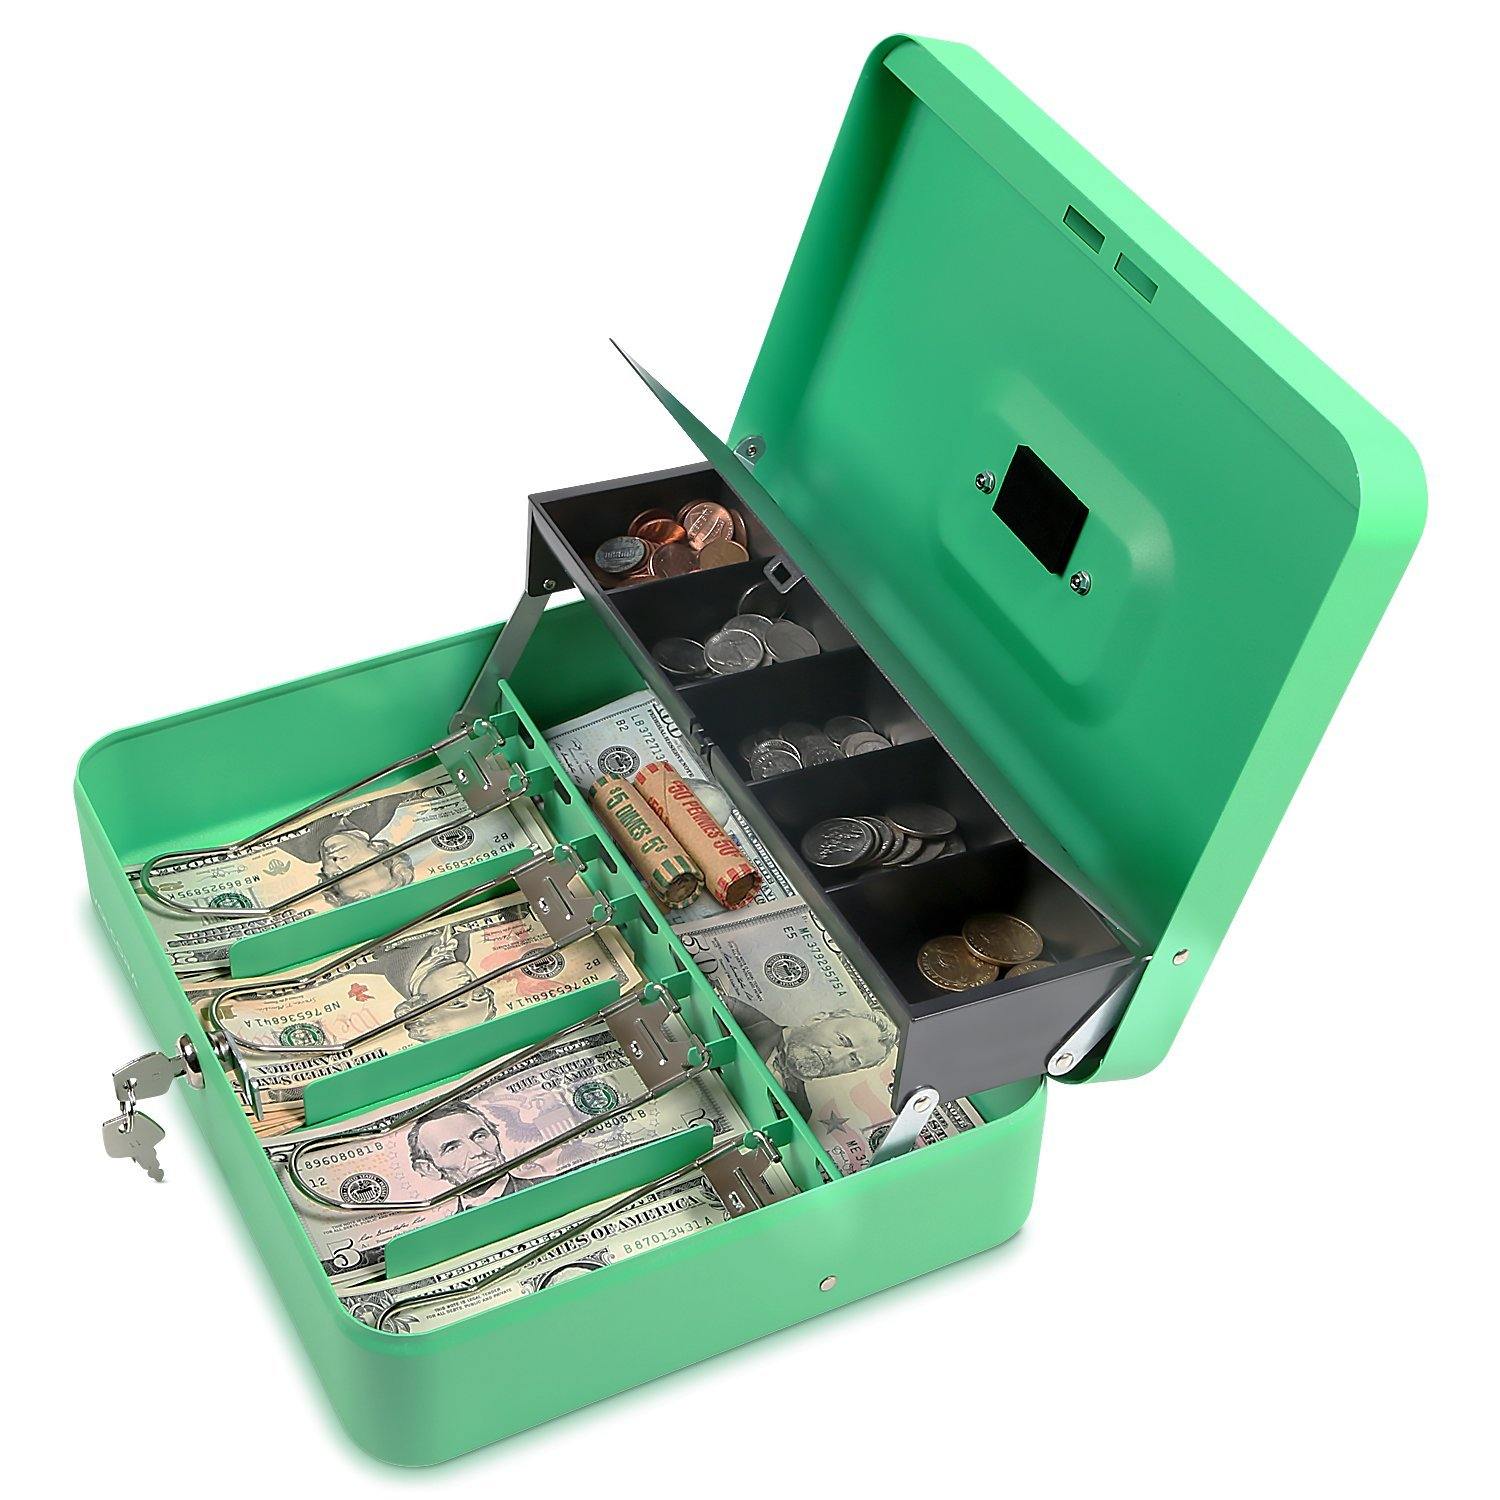 New Cash Box For Petty Cash Metal Security Money Safe Box Key Lock Lockable  Box